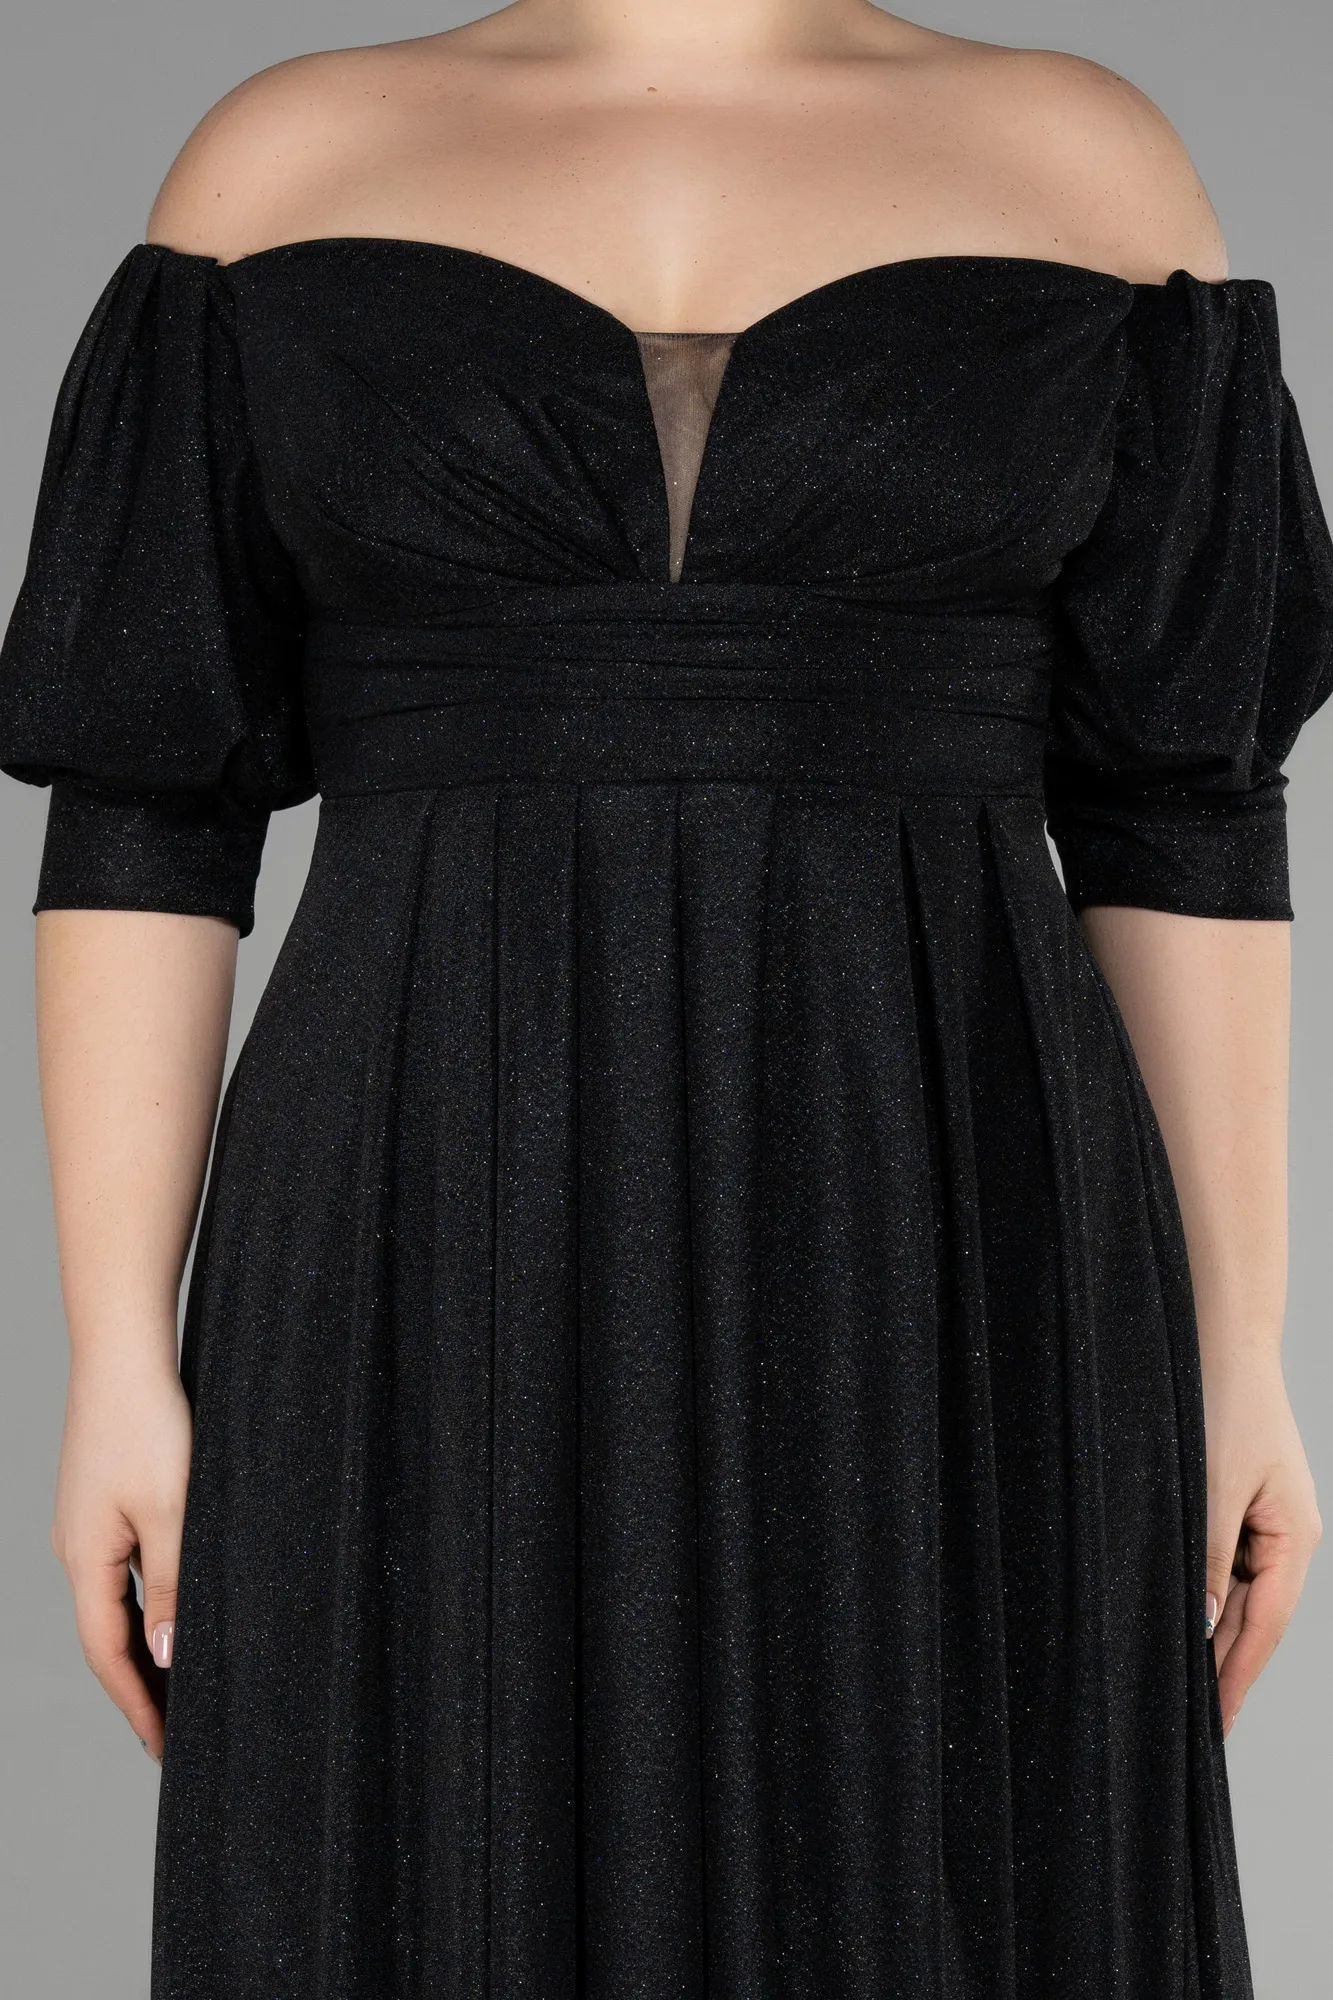 Black-Long Plus Size Evening Dress ABU3615